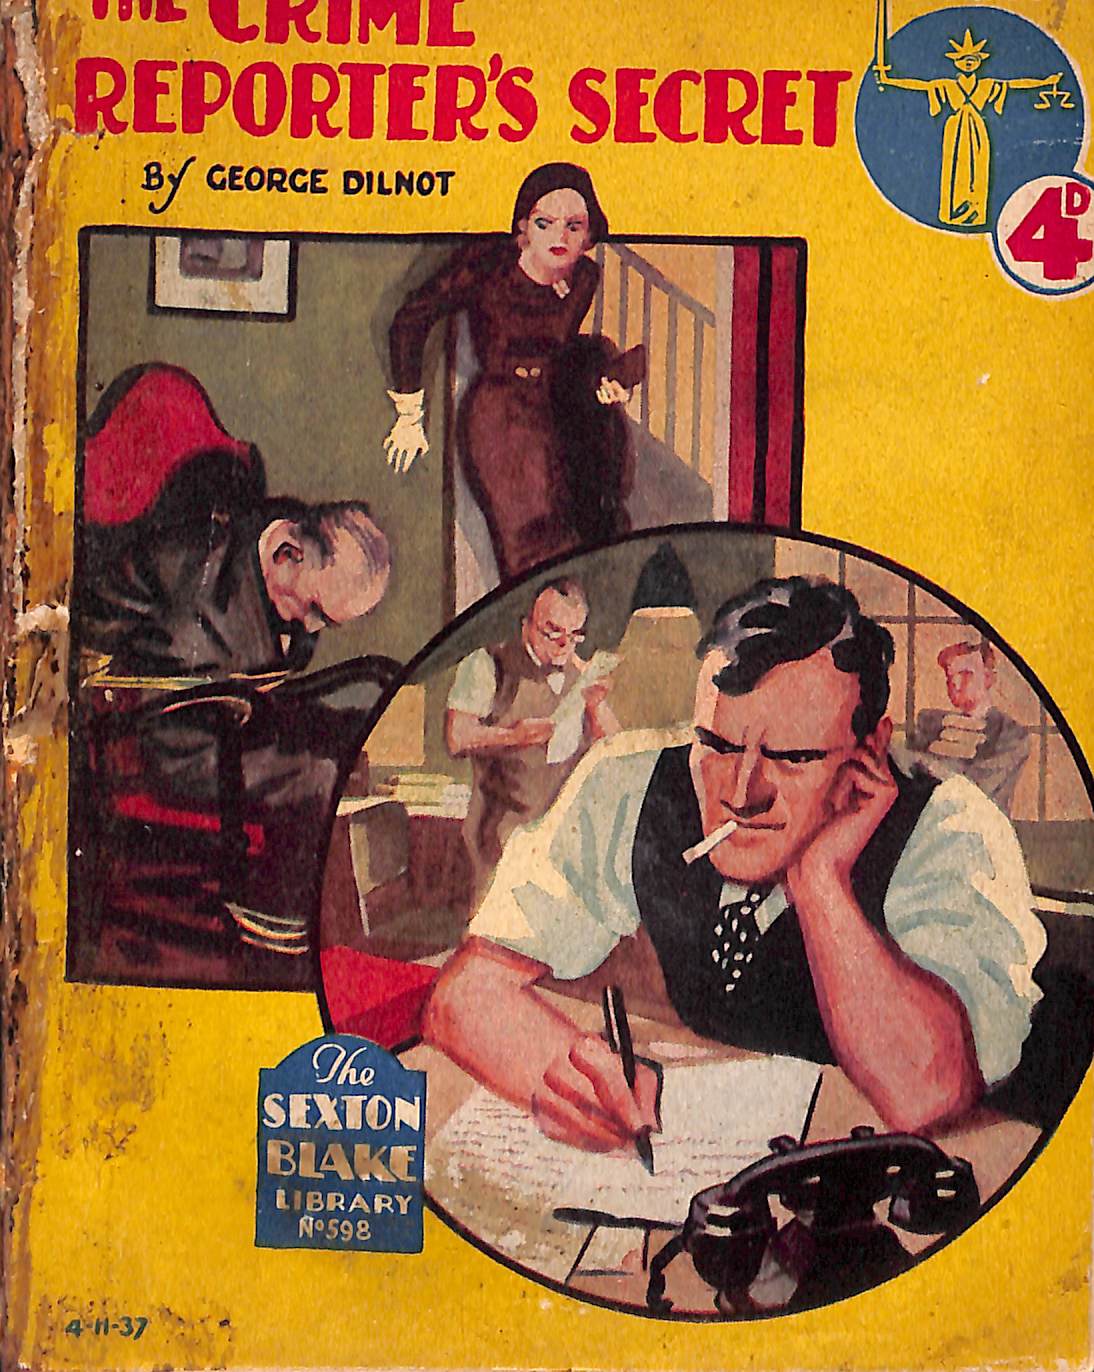 Comic Book Cover For Sexton Blake Library S2 598 - The Crime Reporter's Secret